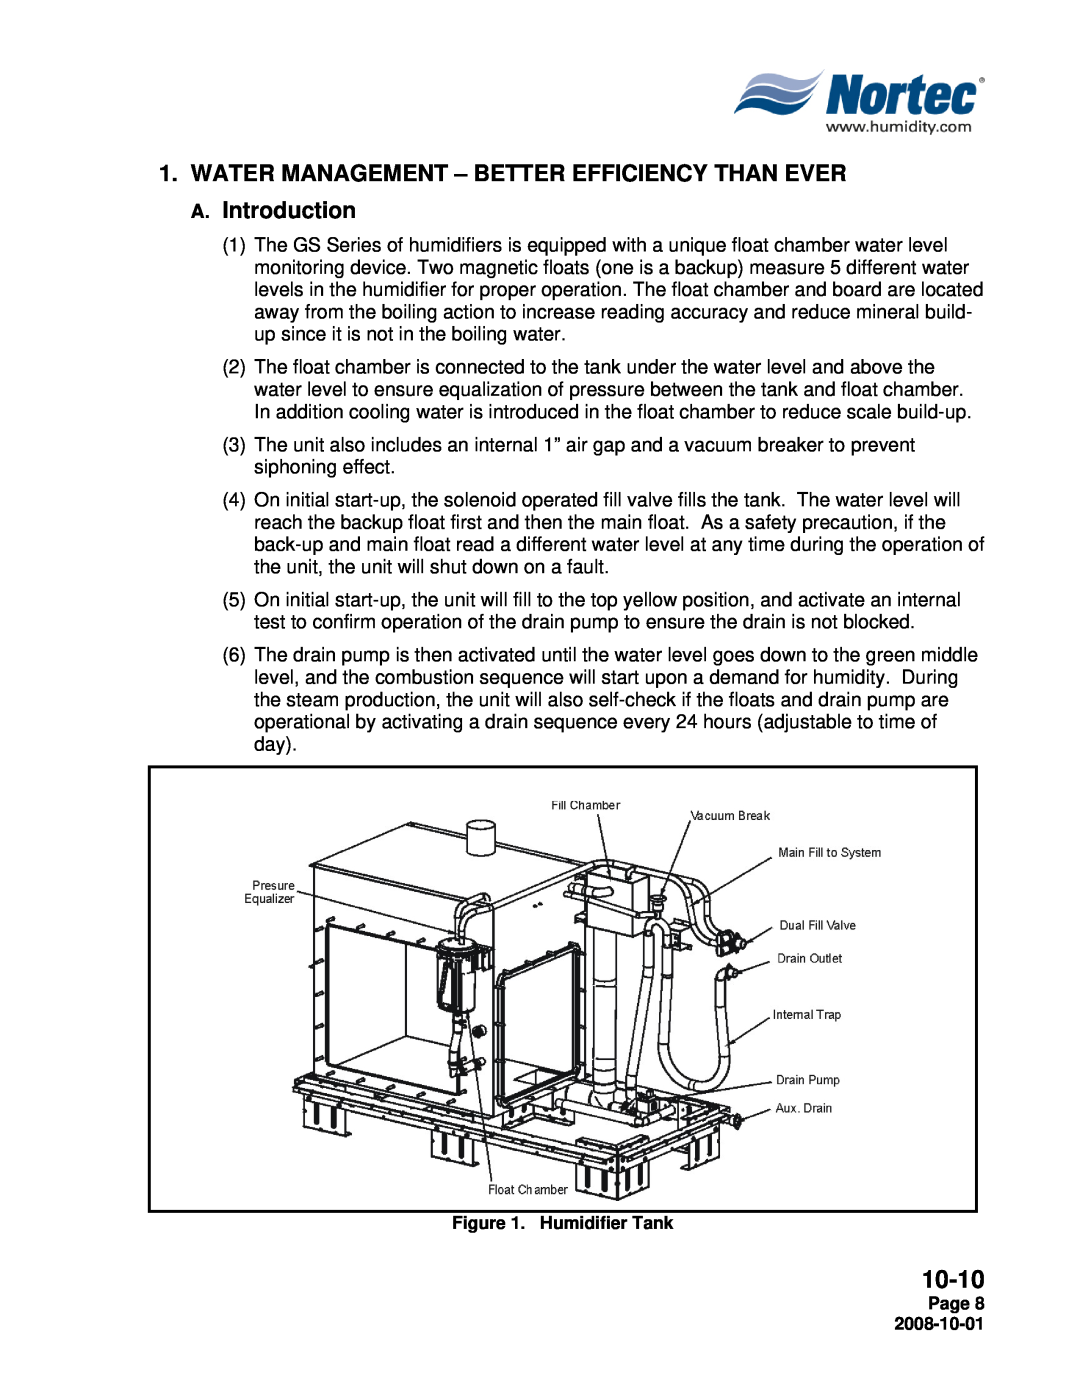 Nortec Industries GSTC Outdoor, GSTC Indoor, GSP Indoor manual 10-10, Humidifier Tank, Page 